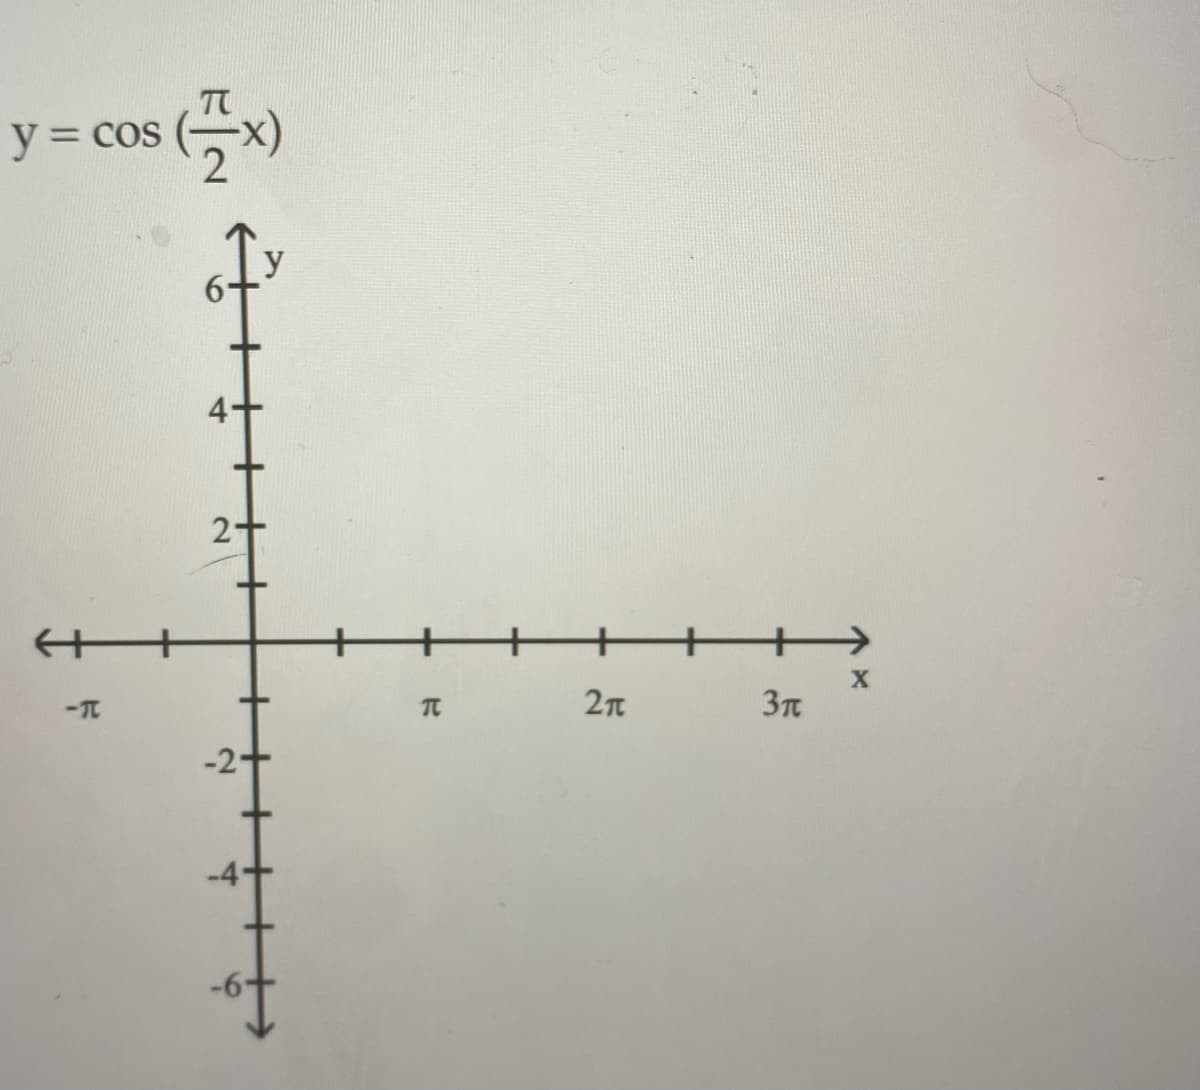 y=cos (2)
н
-п
2
T
2 п
-
3п
X